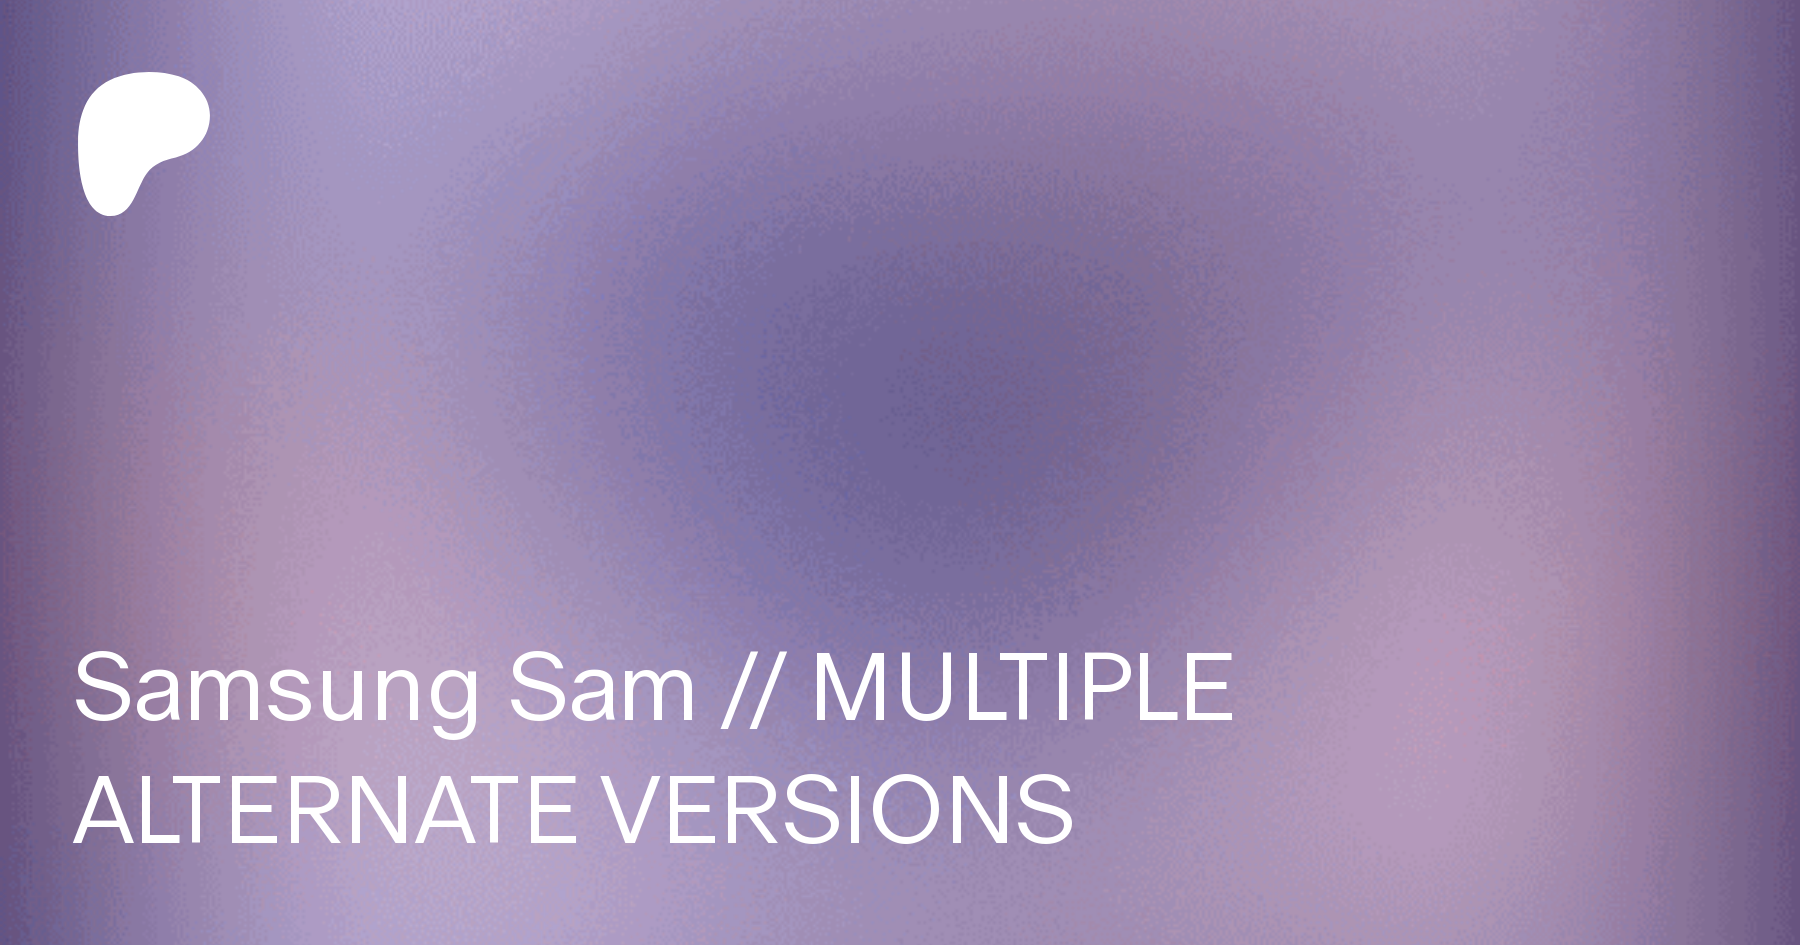 Samsung Sam // MULTIPLE ALTERNATE VERSIONS